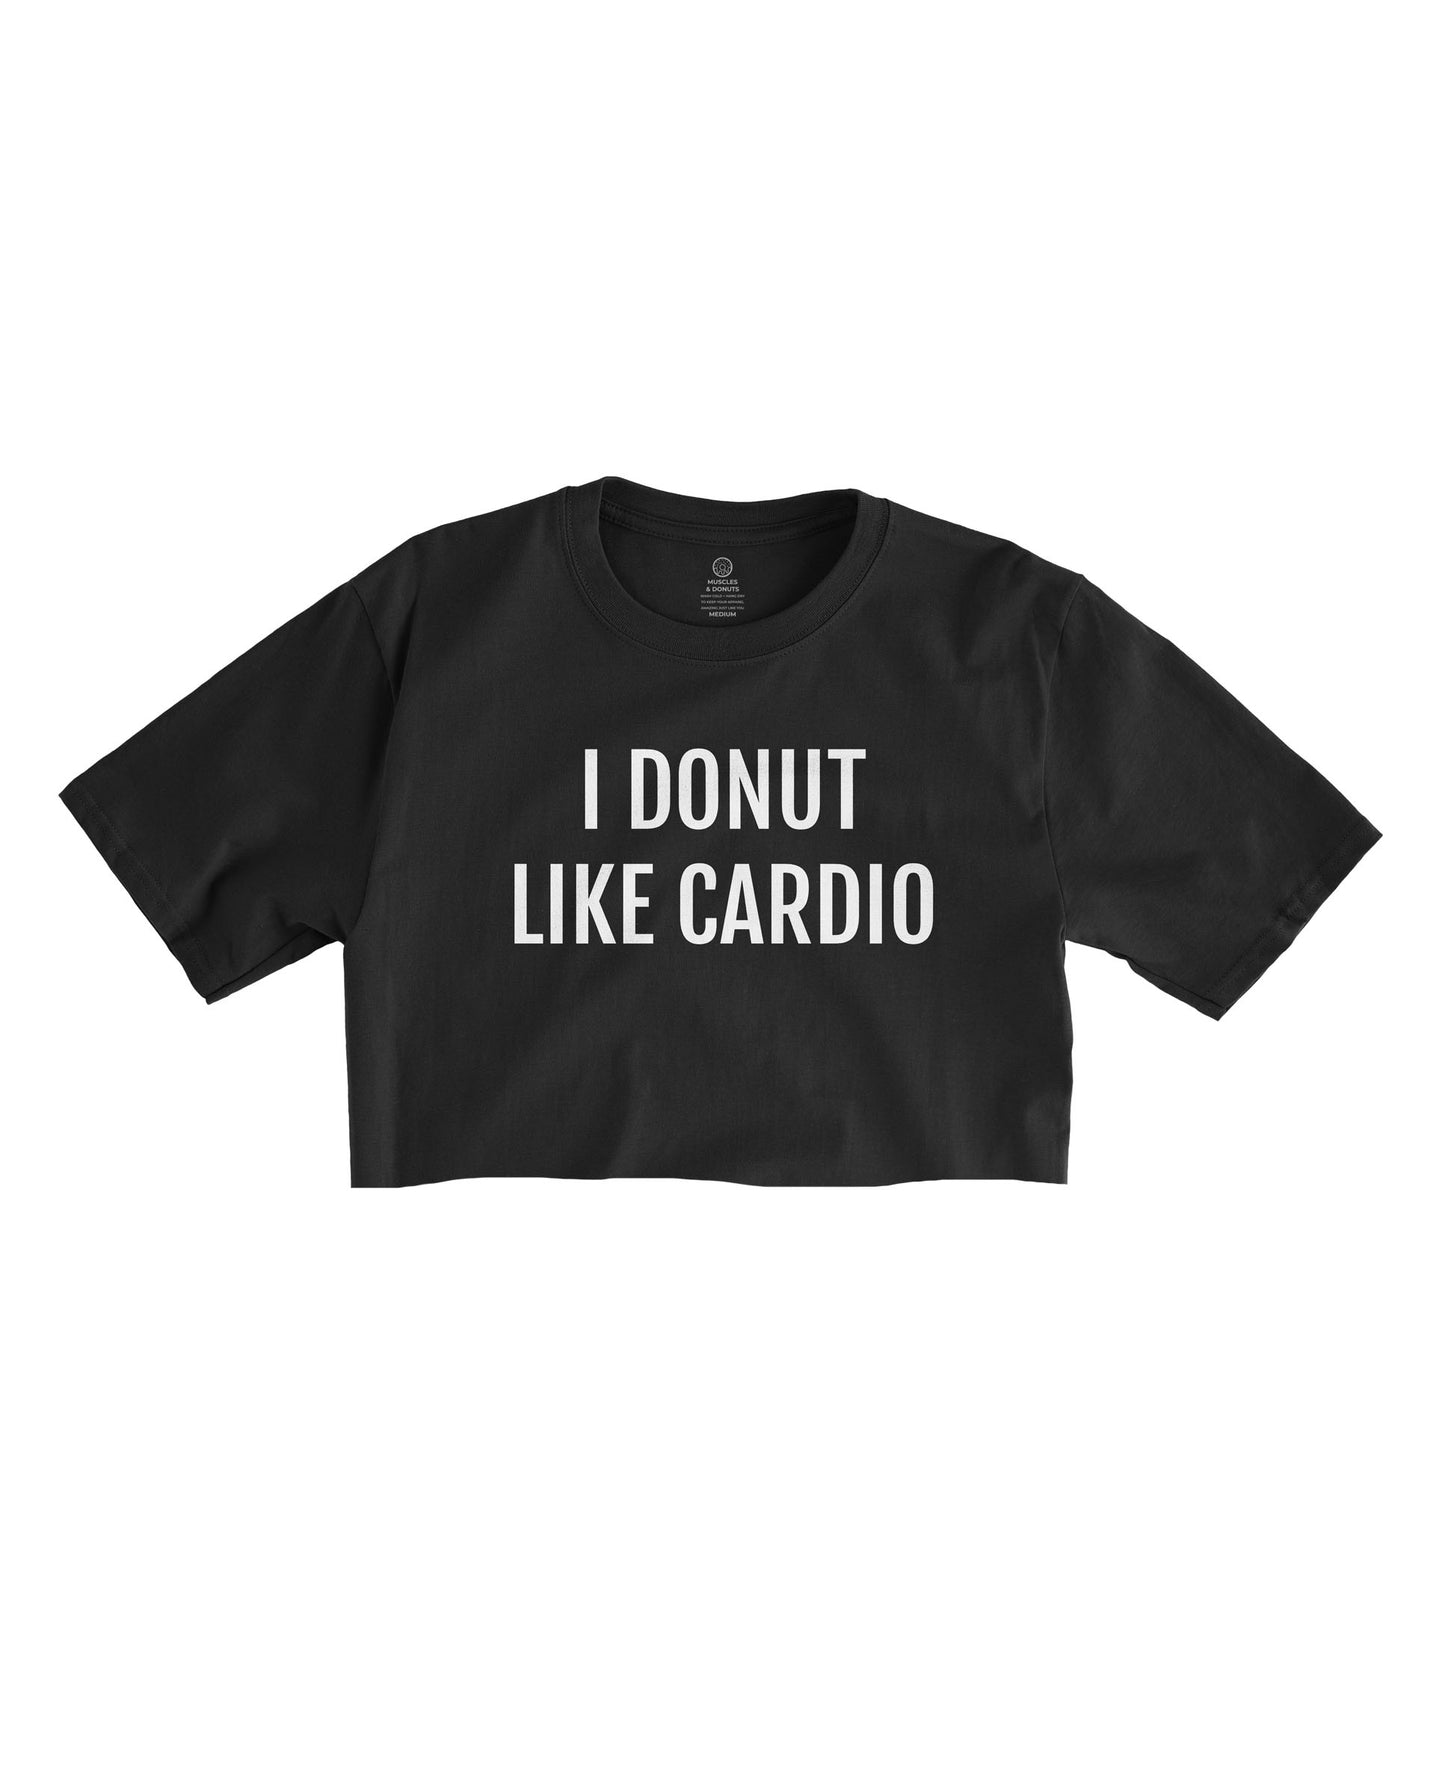 I Donut Like Cardio - Black Cropped Tee